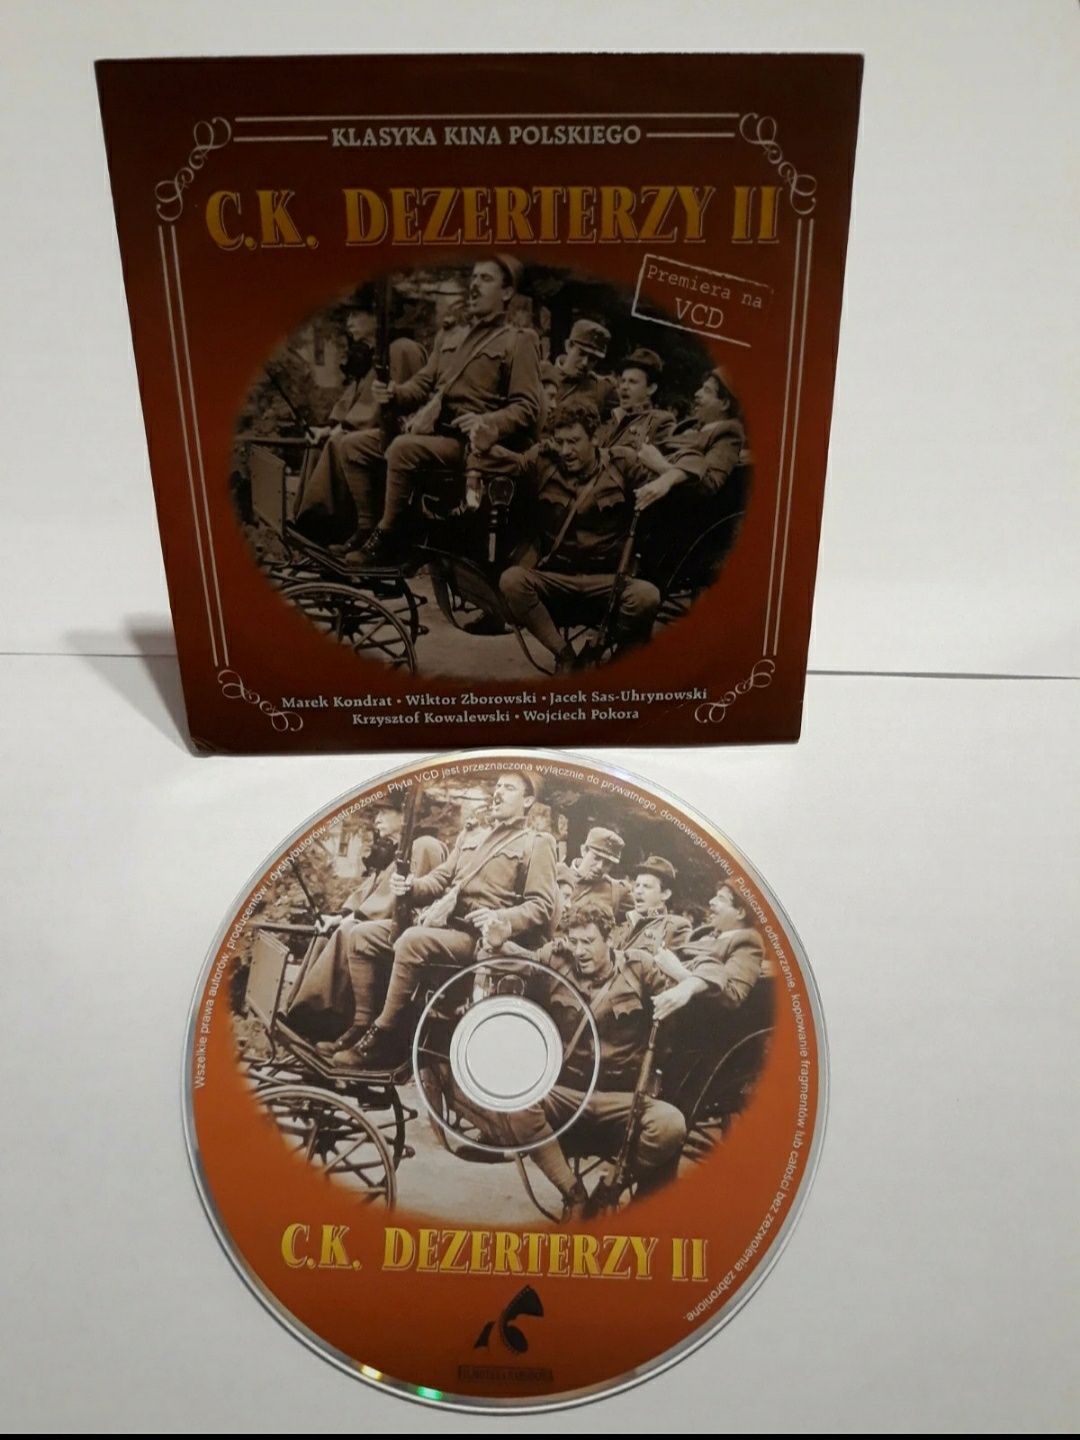 Film DVD "C.K. Dezerterzy II"